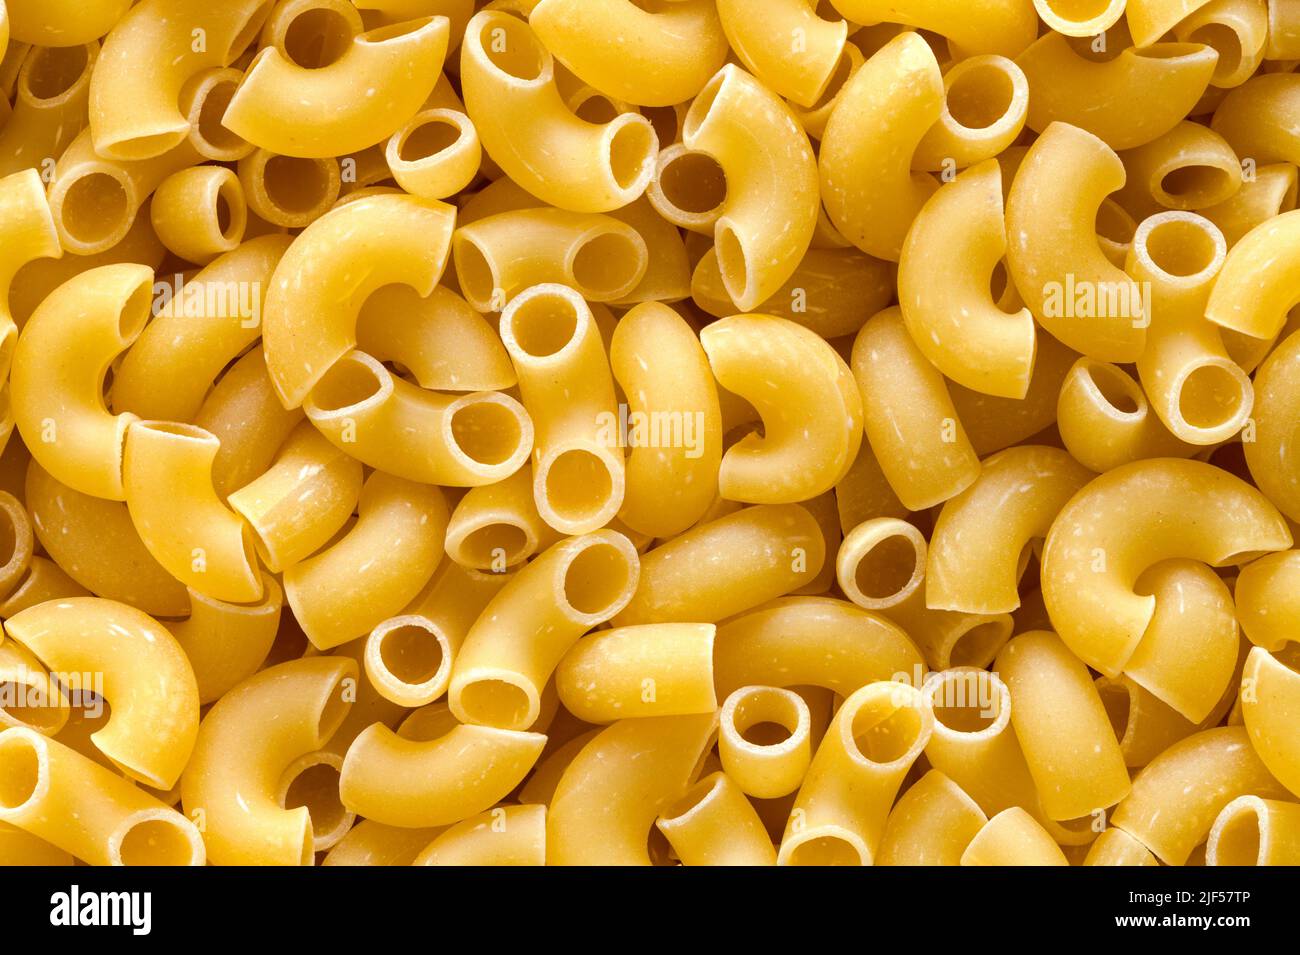 Trocken Ellenbogen Pasta Macaroni Nudel Haufen Hintergrund. Stockfoto